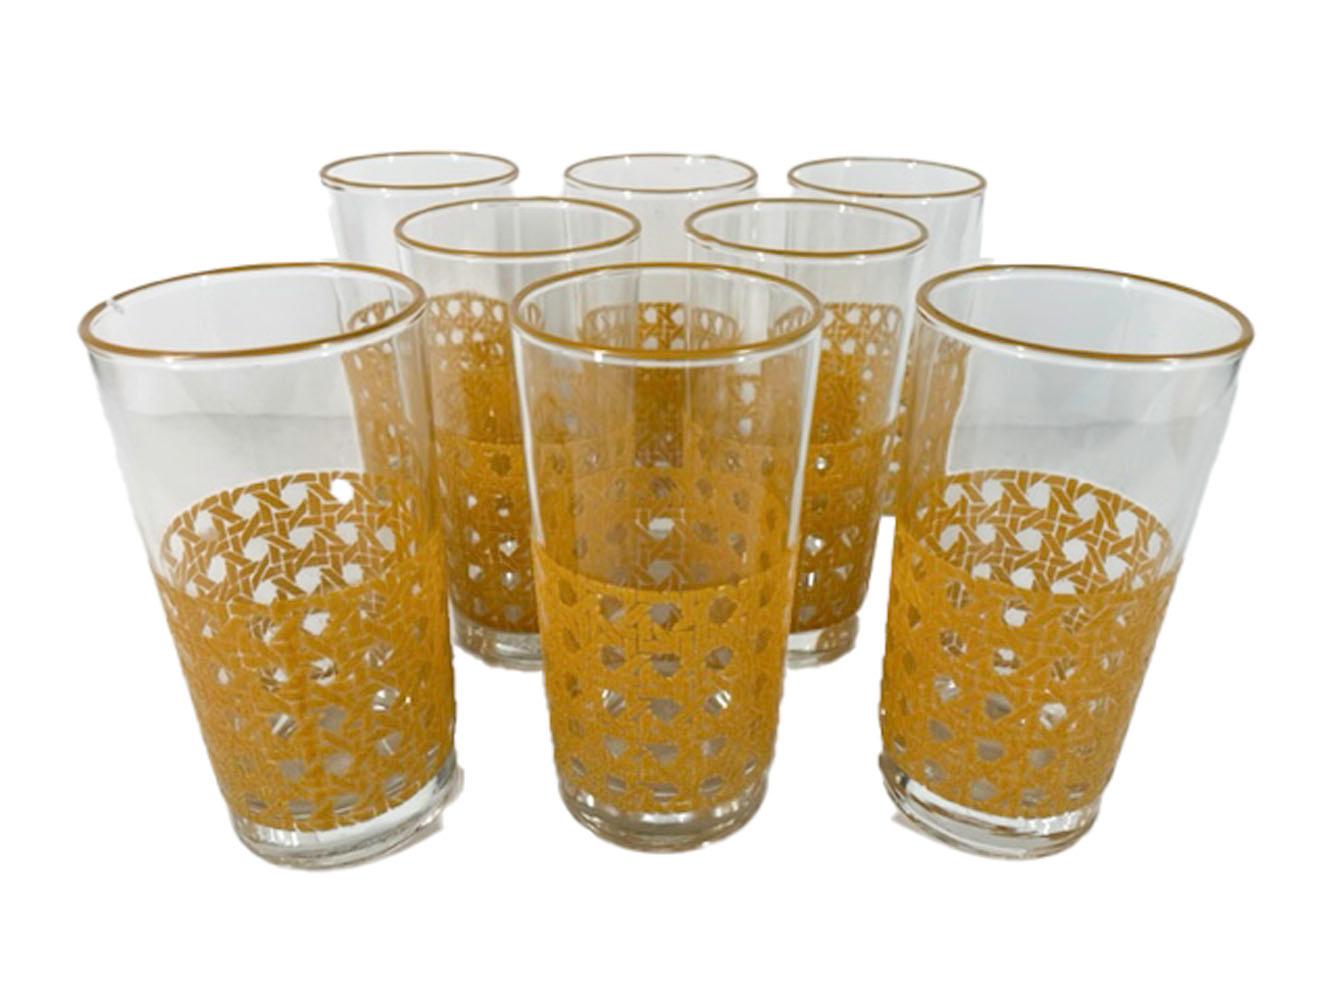 vintage glassware patterns